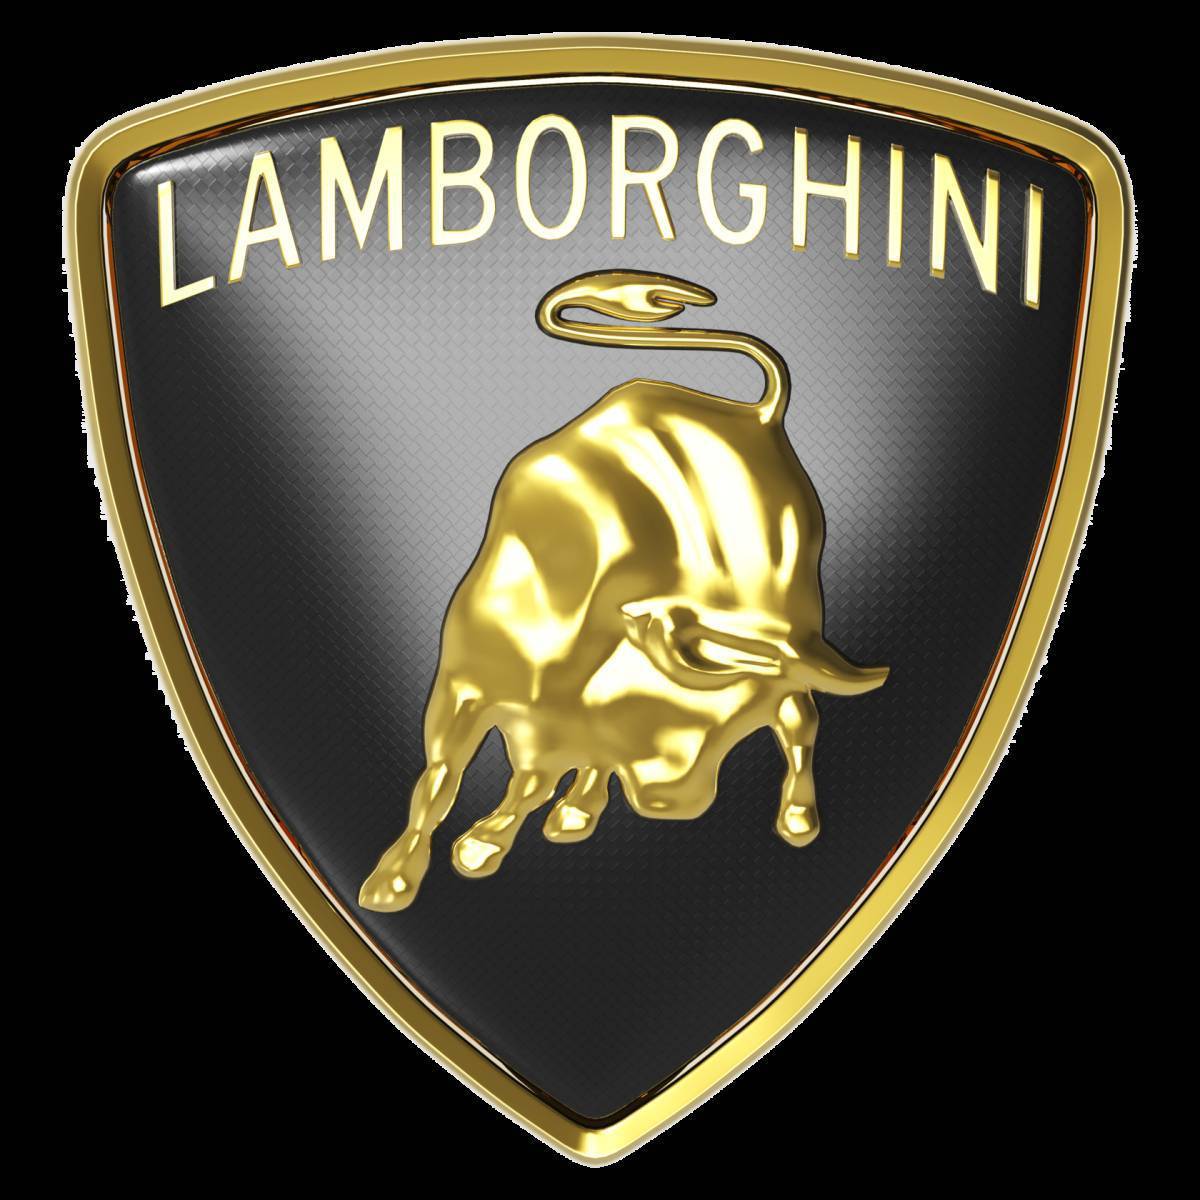 Ламба значок. Значок Ламборгини. Ламборджини шильдик. Логотип компании Lamborghini. Знак компании Ламборджини.